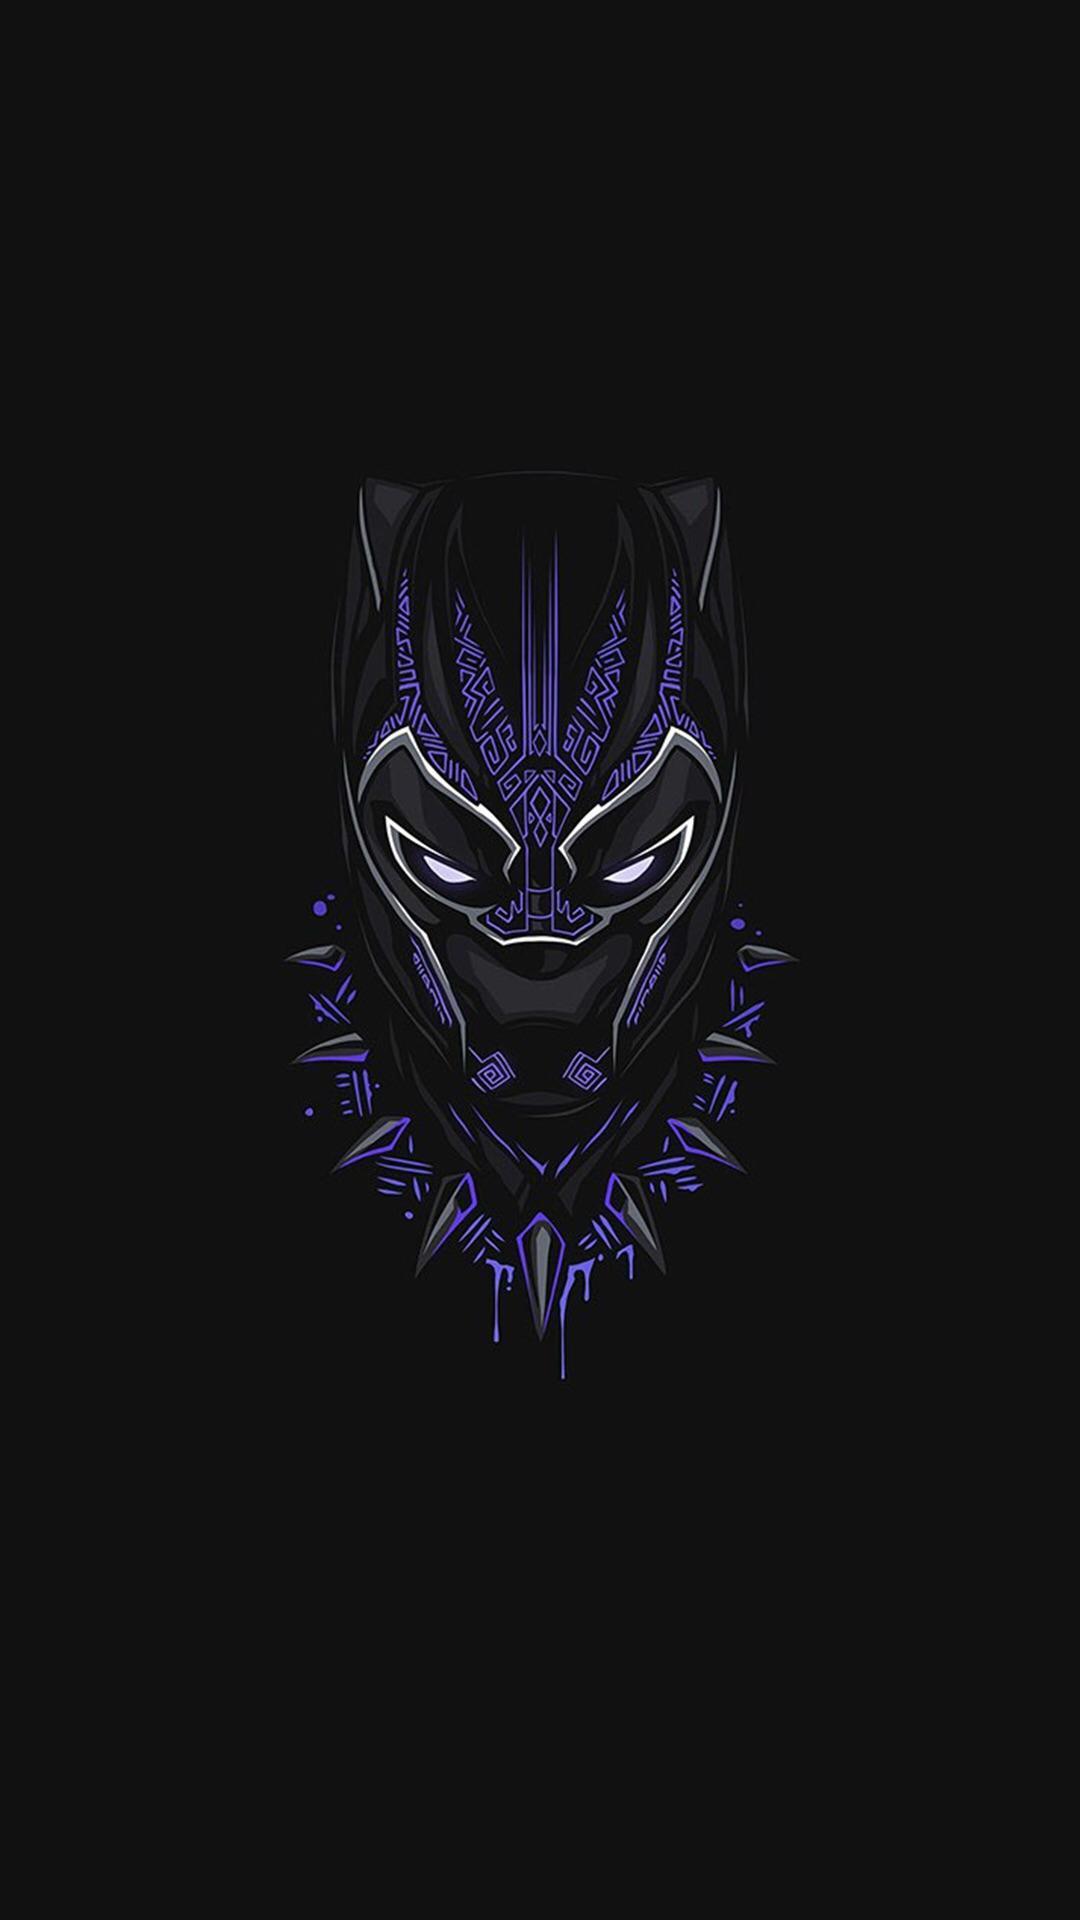 Black panther iPhoneX Wallpaper